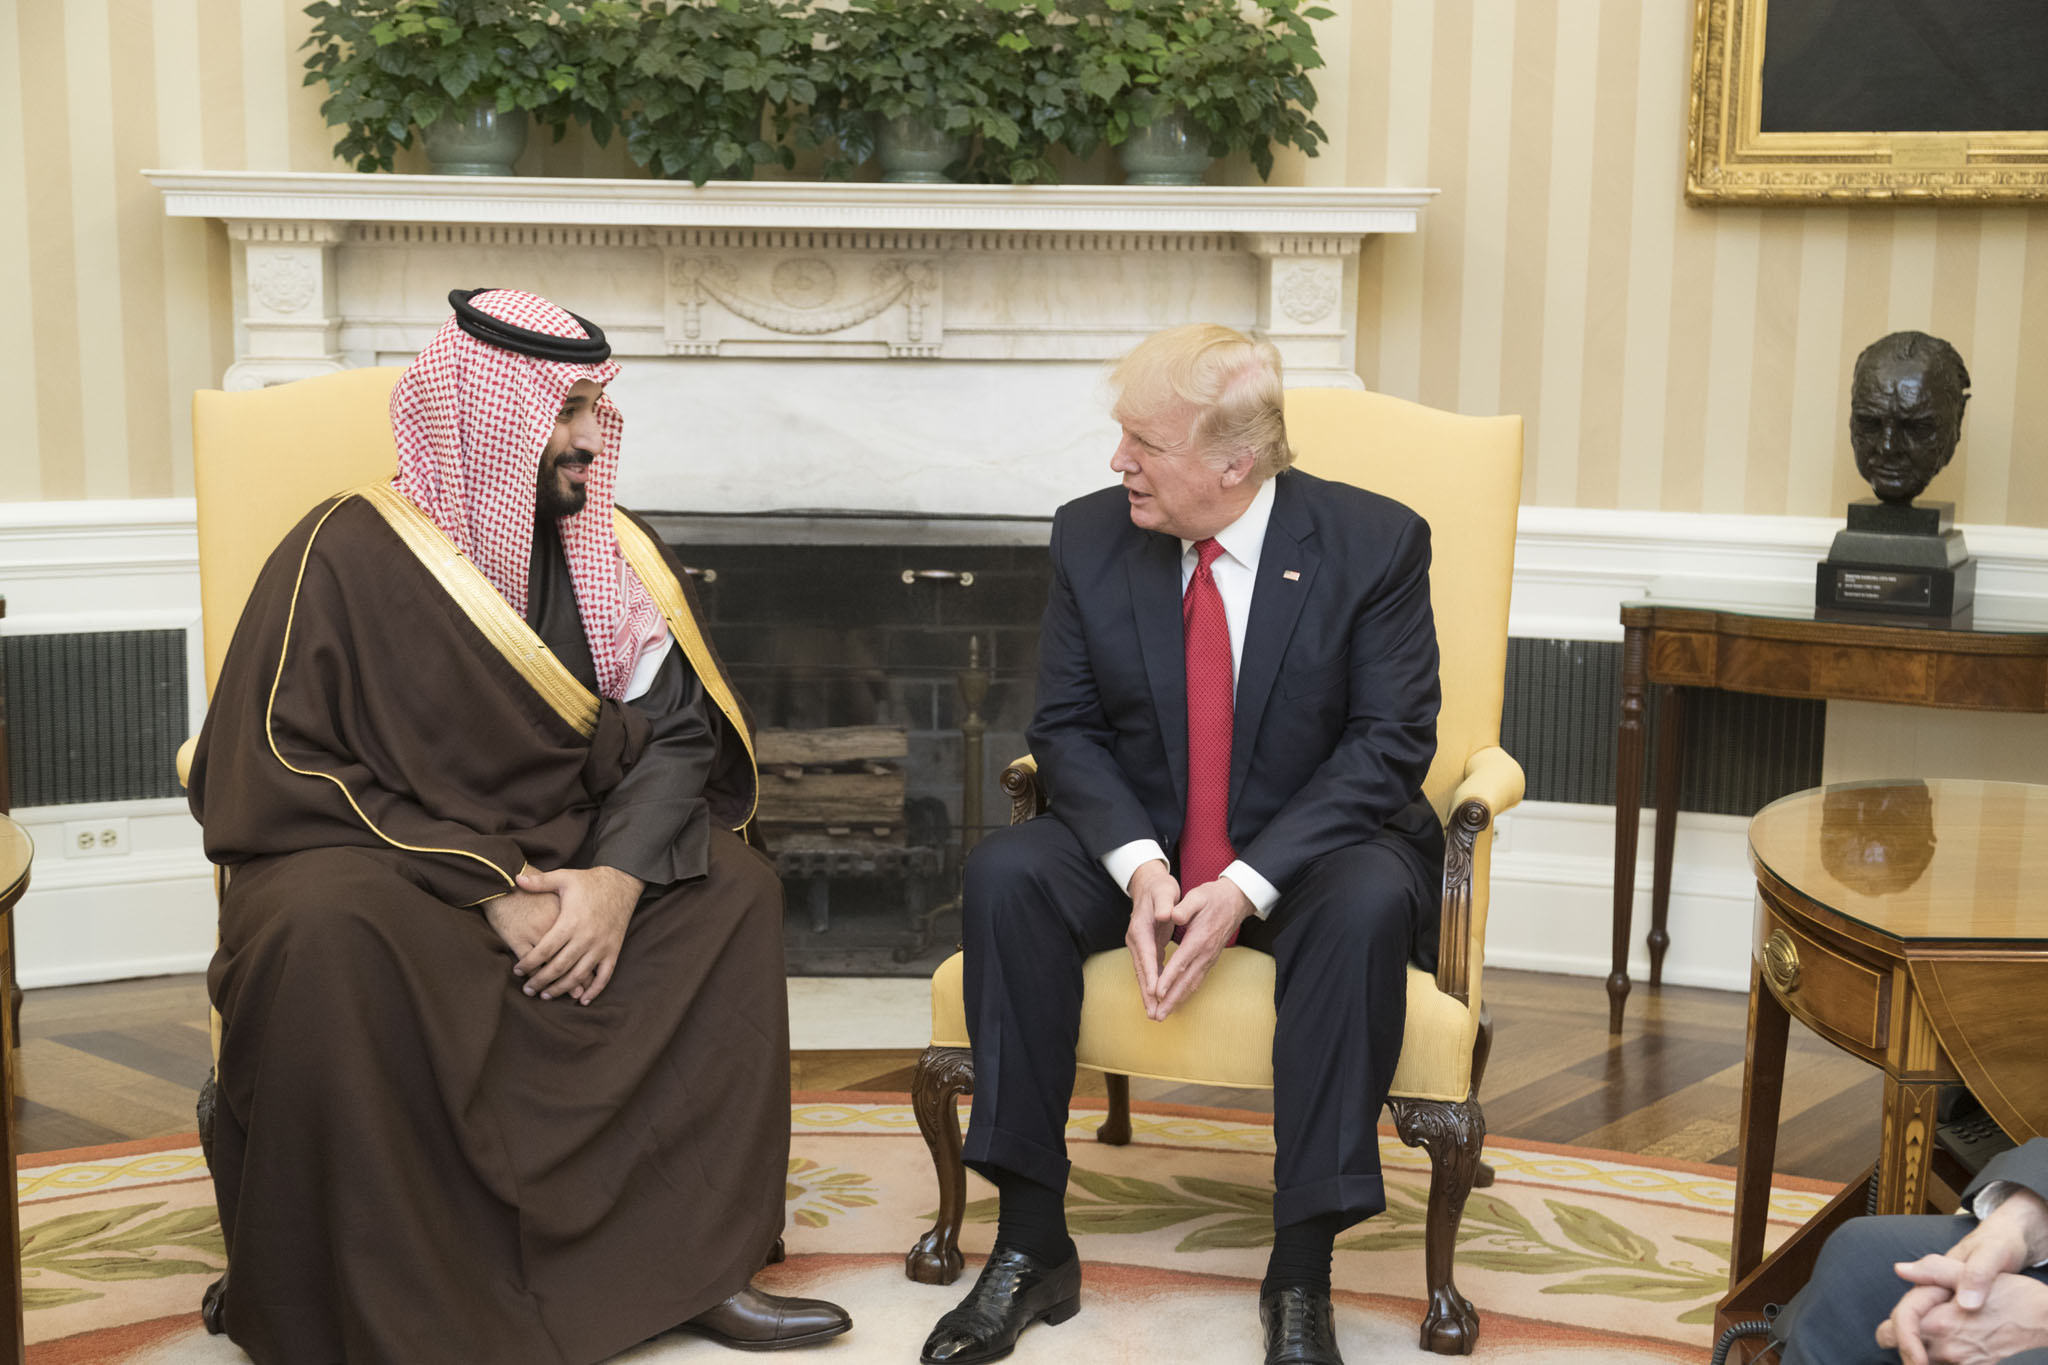 President Trump and Saudi Crown Prince Mohammed bin Salman